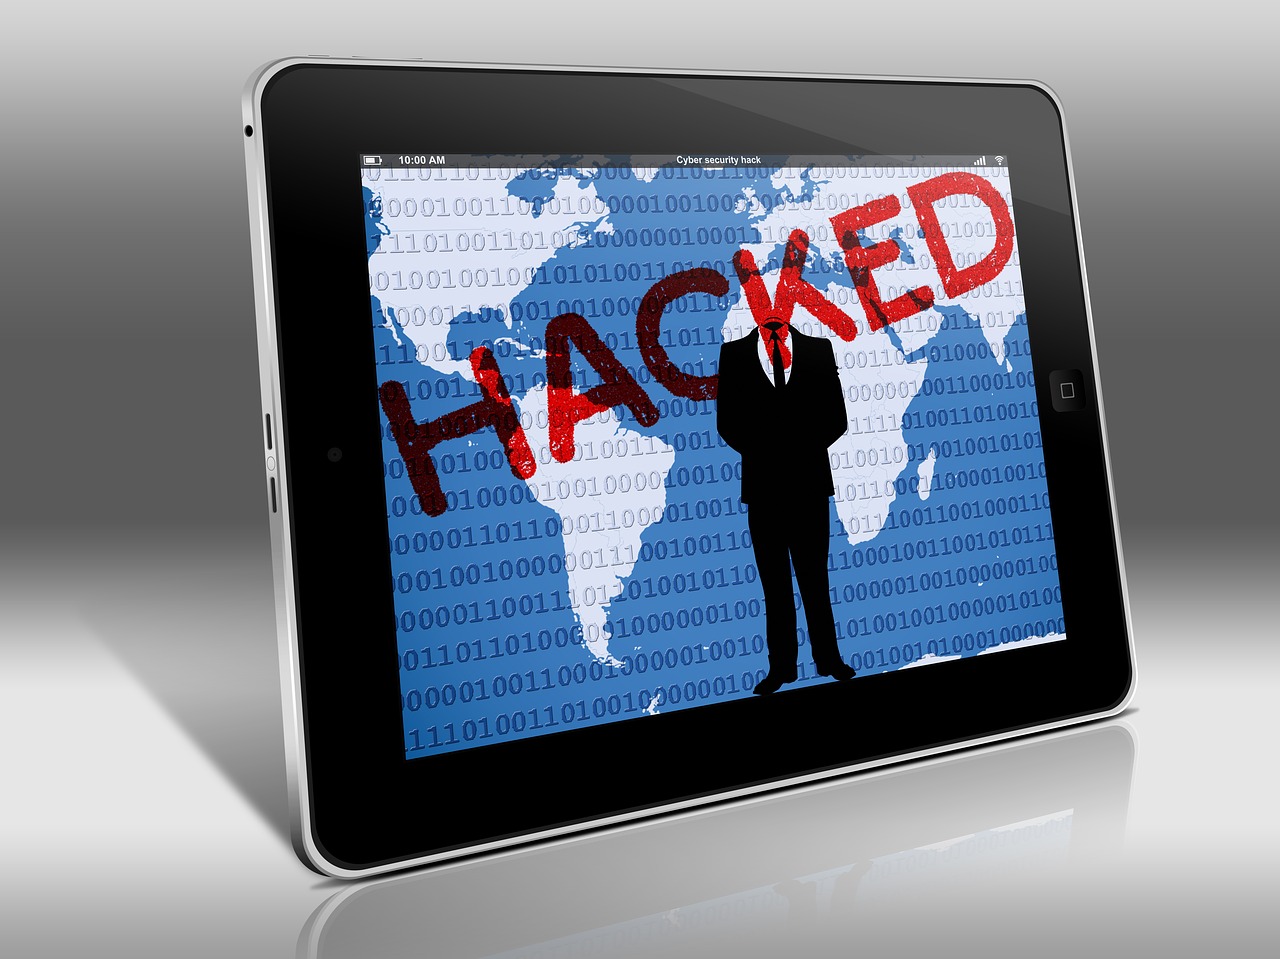 Hacker leaks Domino's customer data; firm says financial information safe